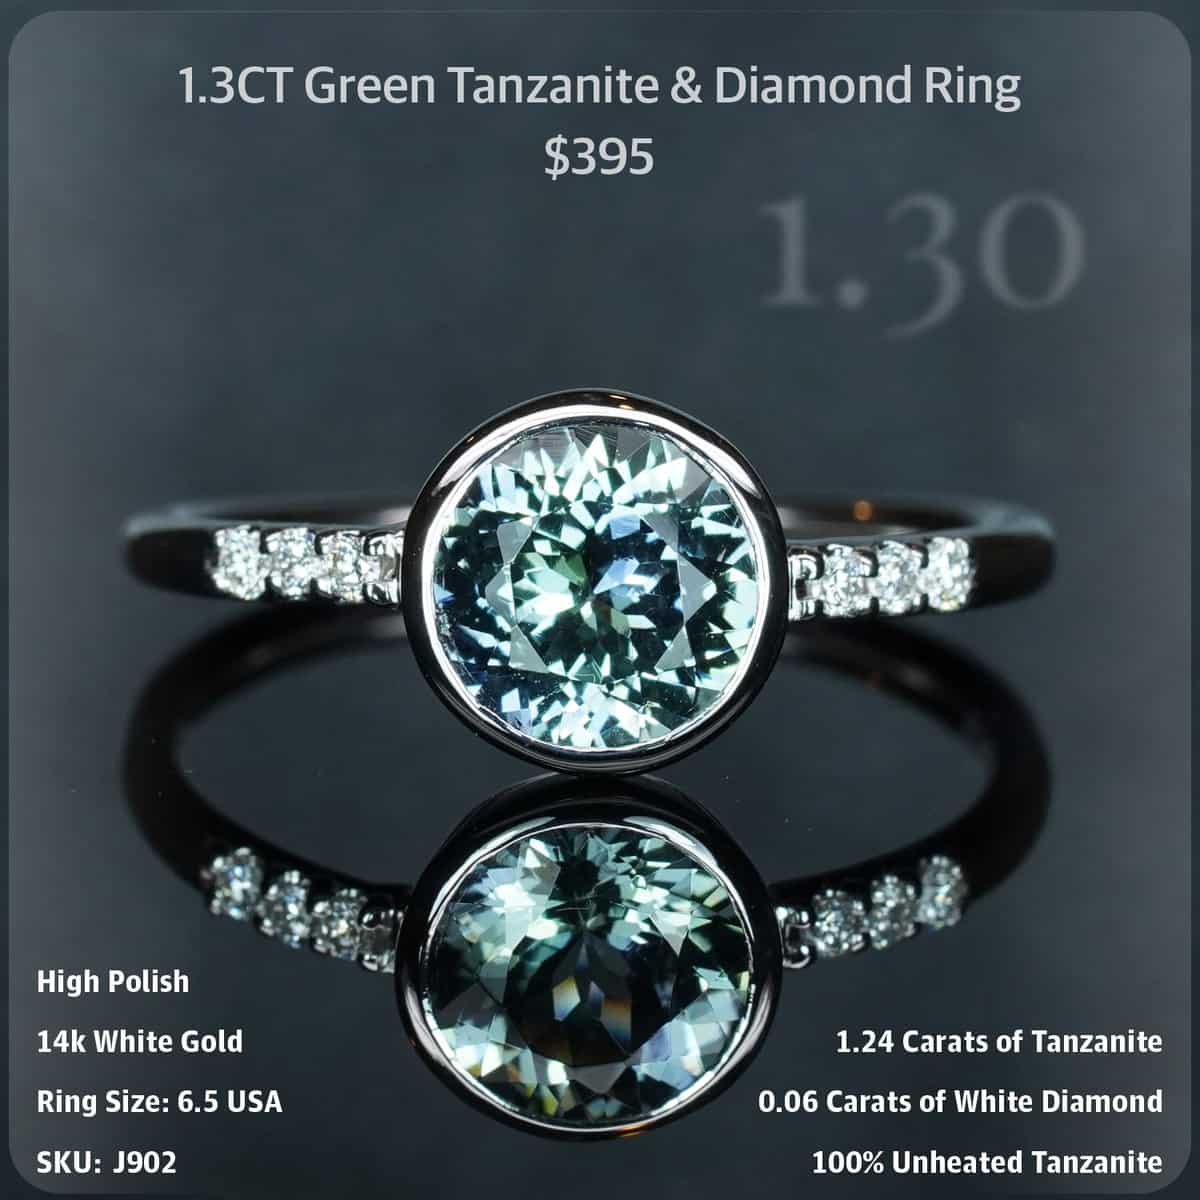 1.3CT Green Tanzanite & Diamond Ring